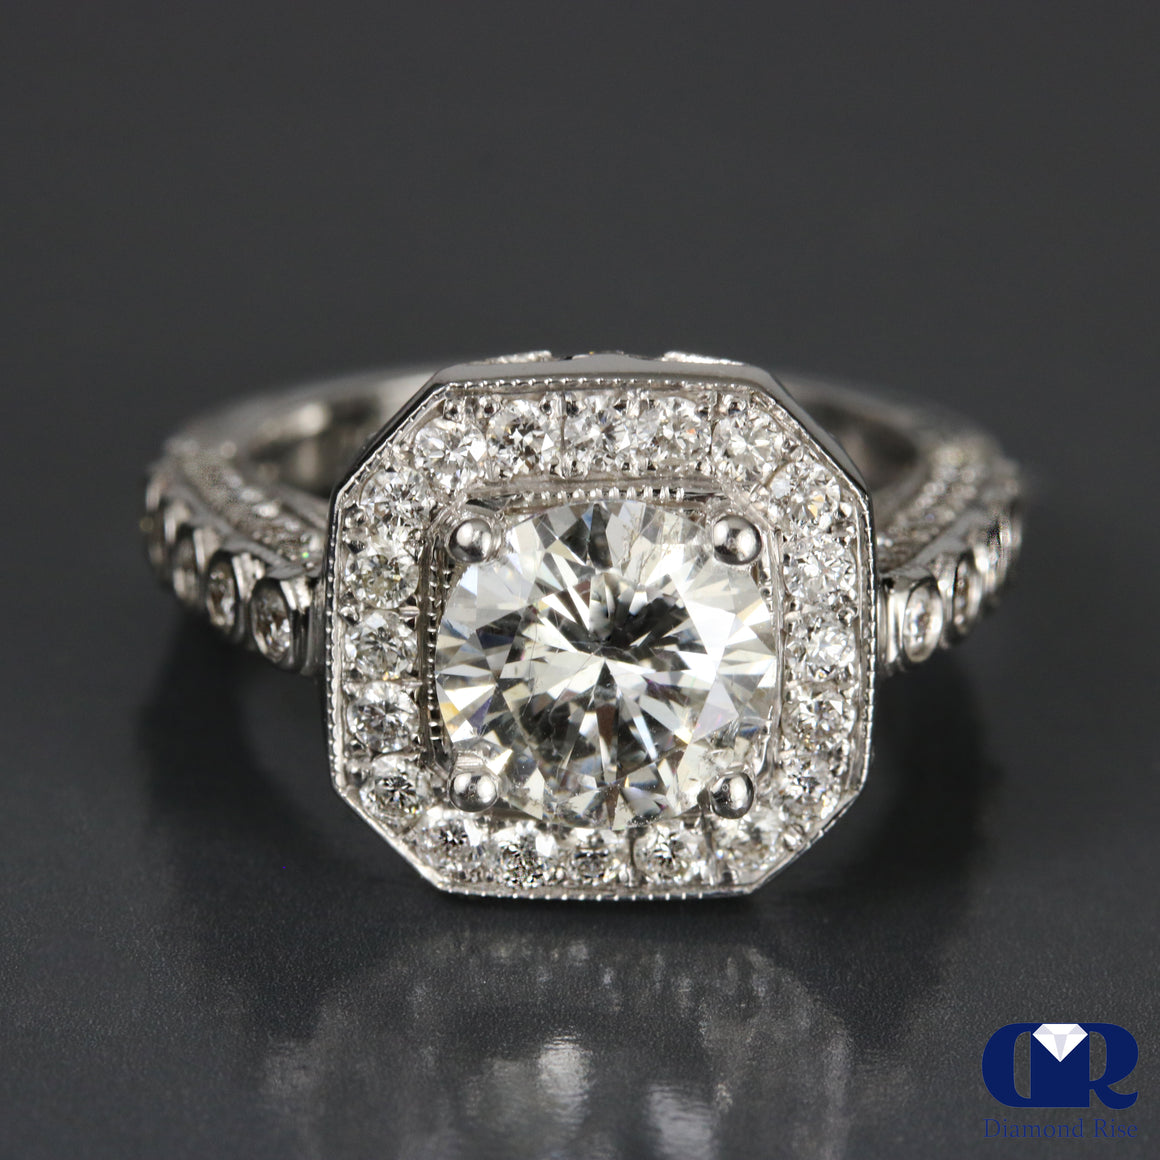 2.94 Carat Round Cut Diamond Halo Engagement Ring In 14K White Gold